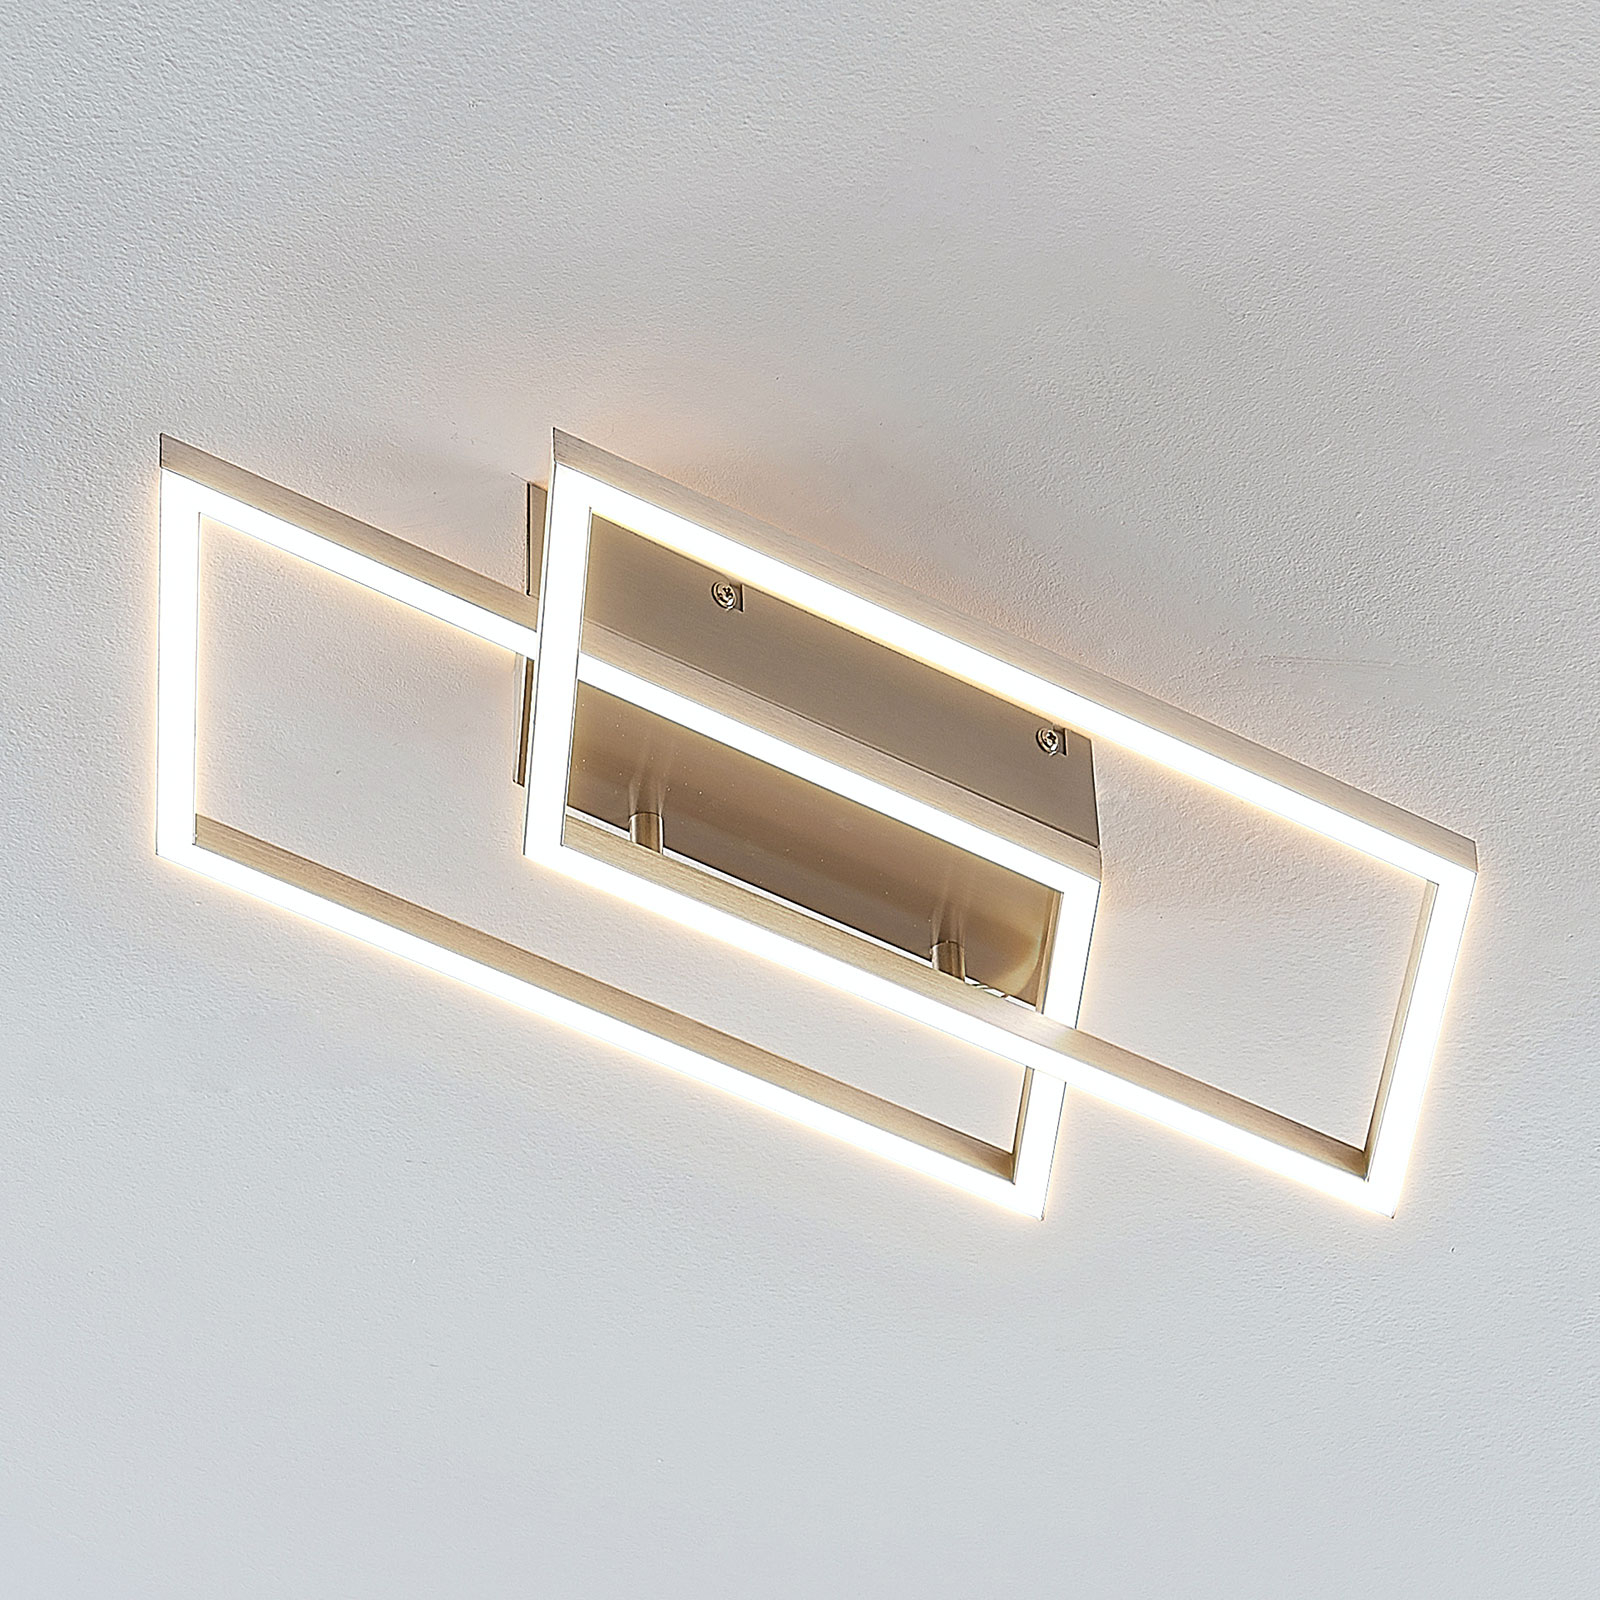 LED-Deckenlampe Quadra, dimmbar, 2-flg., 53,8 cm